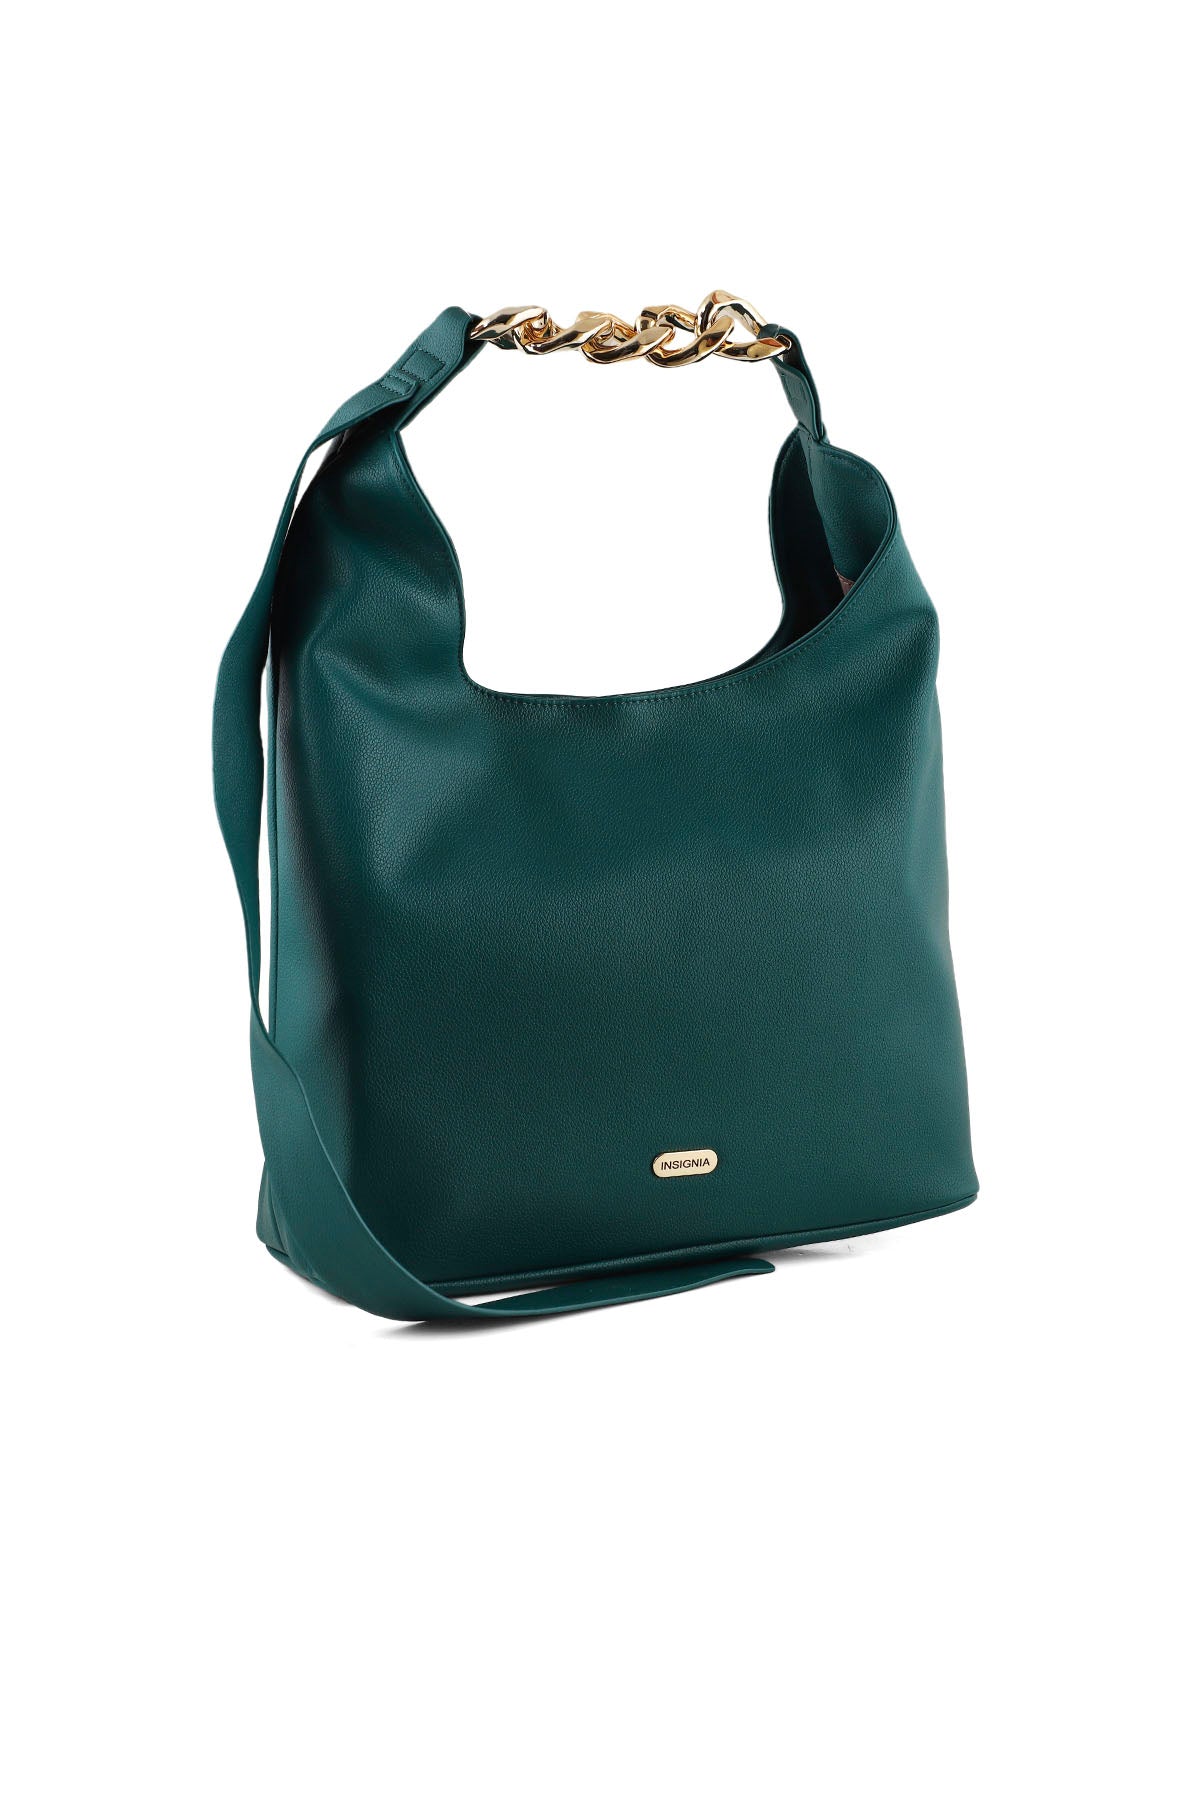 Hobo Hand Bags B15025-Green